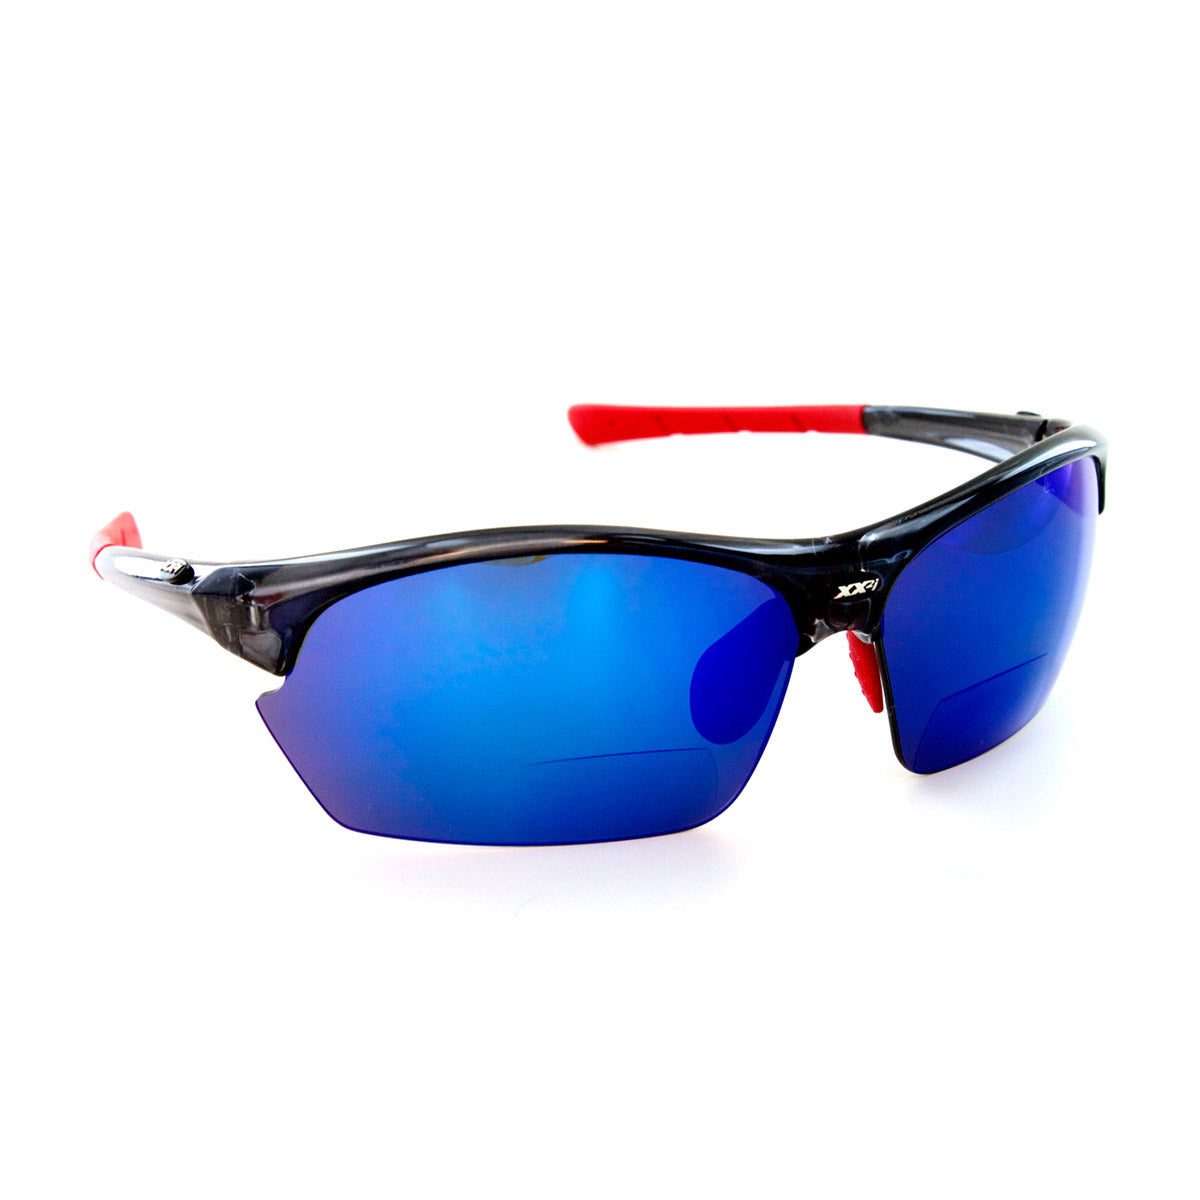 France2 Polarized Sport Reader Sunglasses by Xx2i Optics Black Onyx / Polarized Brown / 2.0